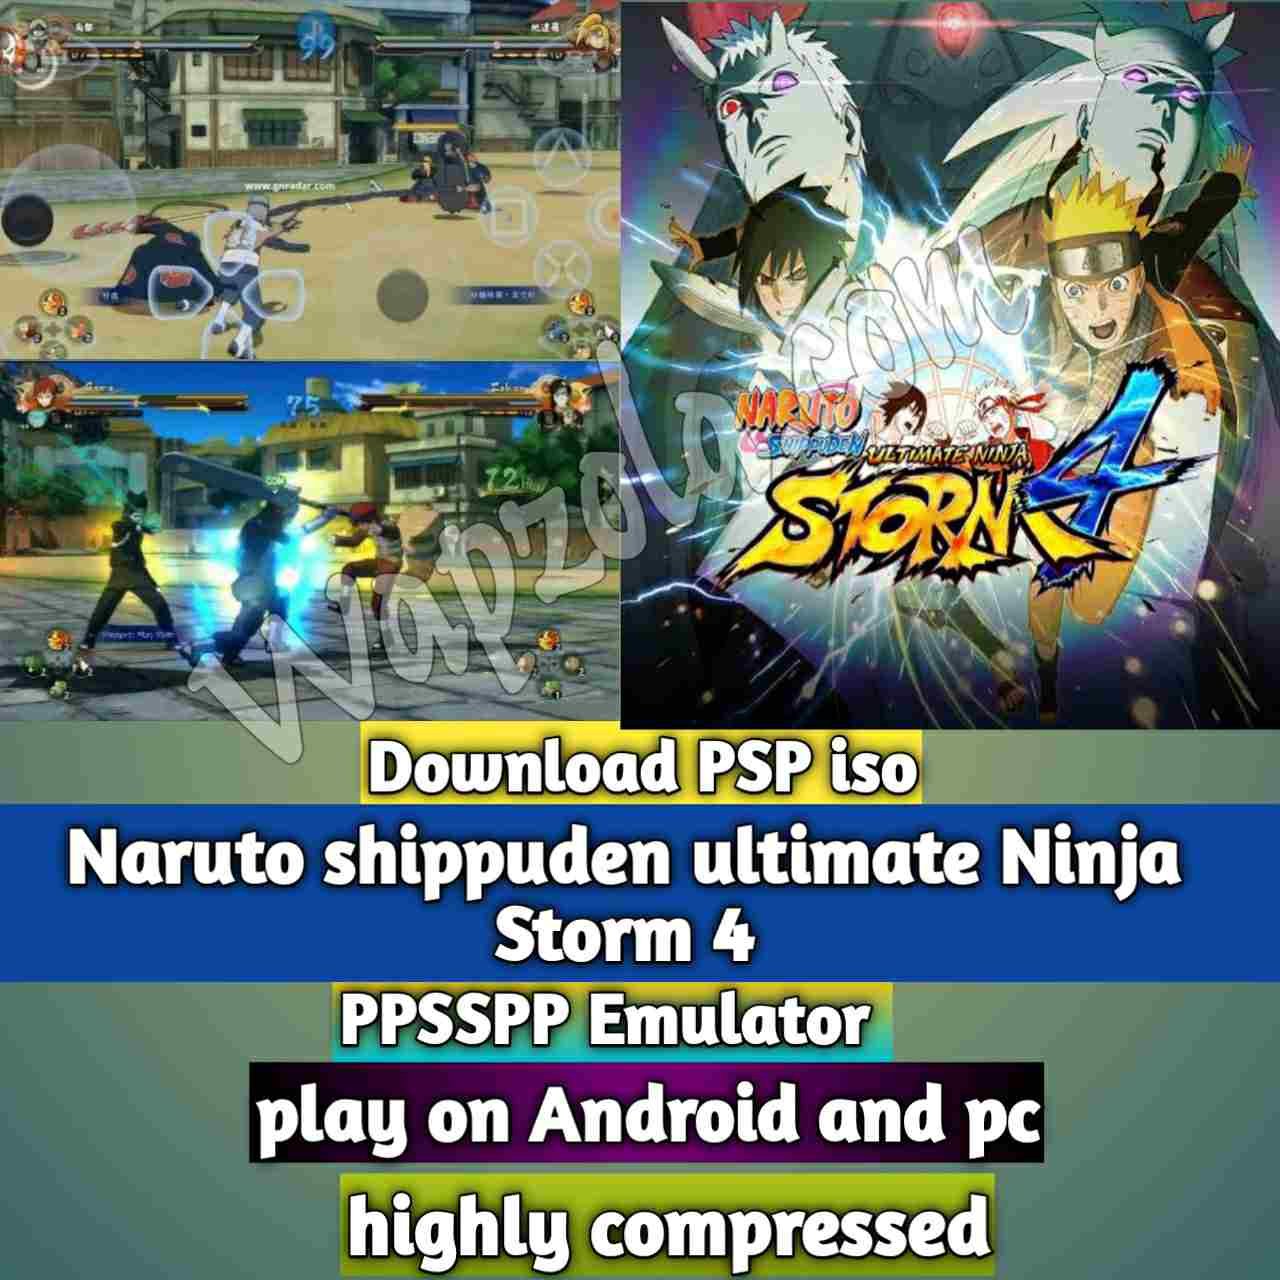 En este momento estás viendo [Descargar] Naruto shippuden ultimate Ninja Storm 4 Mod iso ppsspp emulador – PSP APK Iso Rom altamente comprimido 800MB